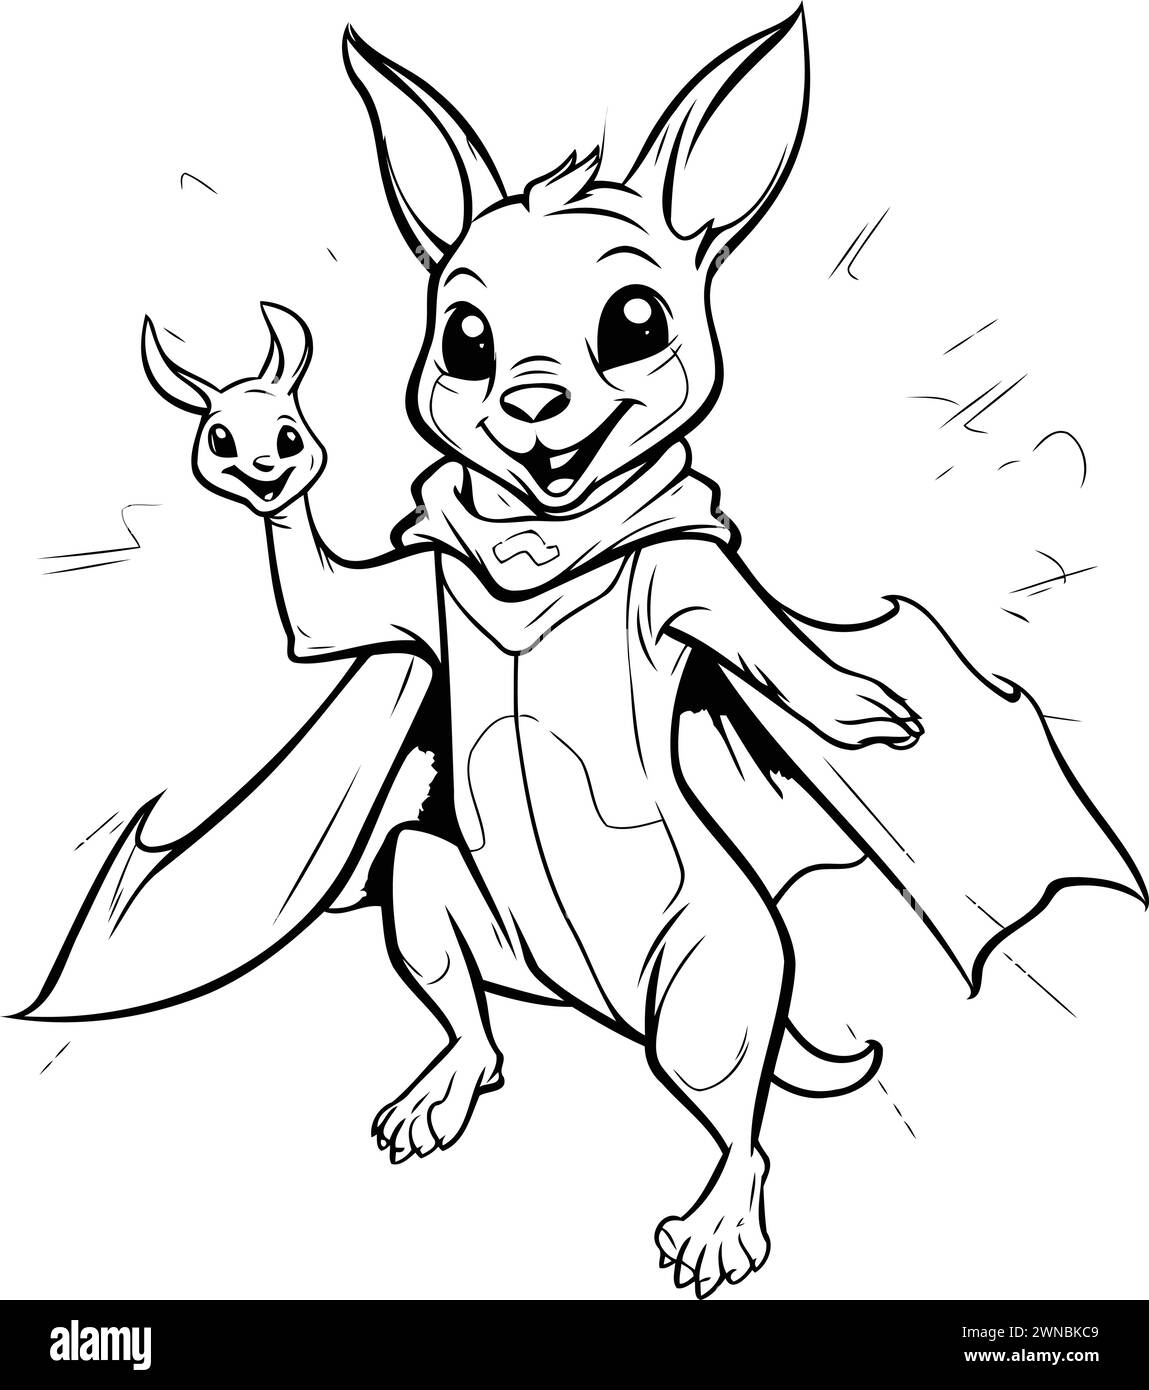 Cartoon Illustration of Superhero Rabbit Comic Character for Coloring Book Stock Vector